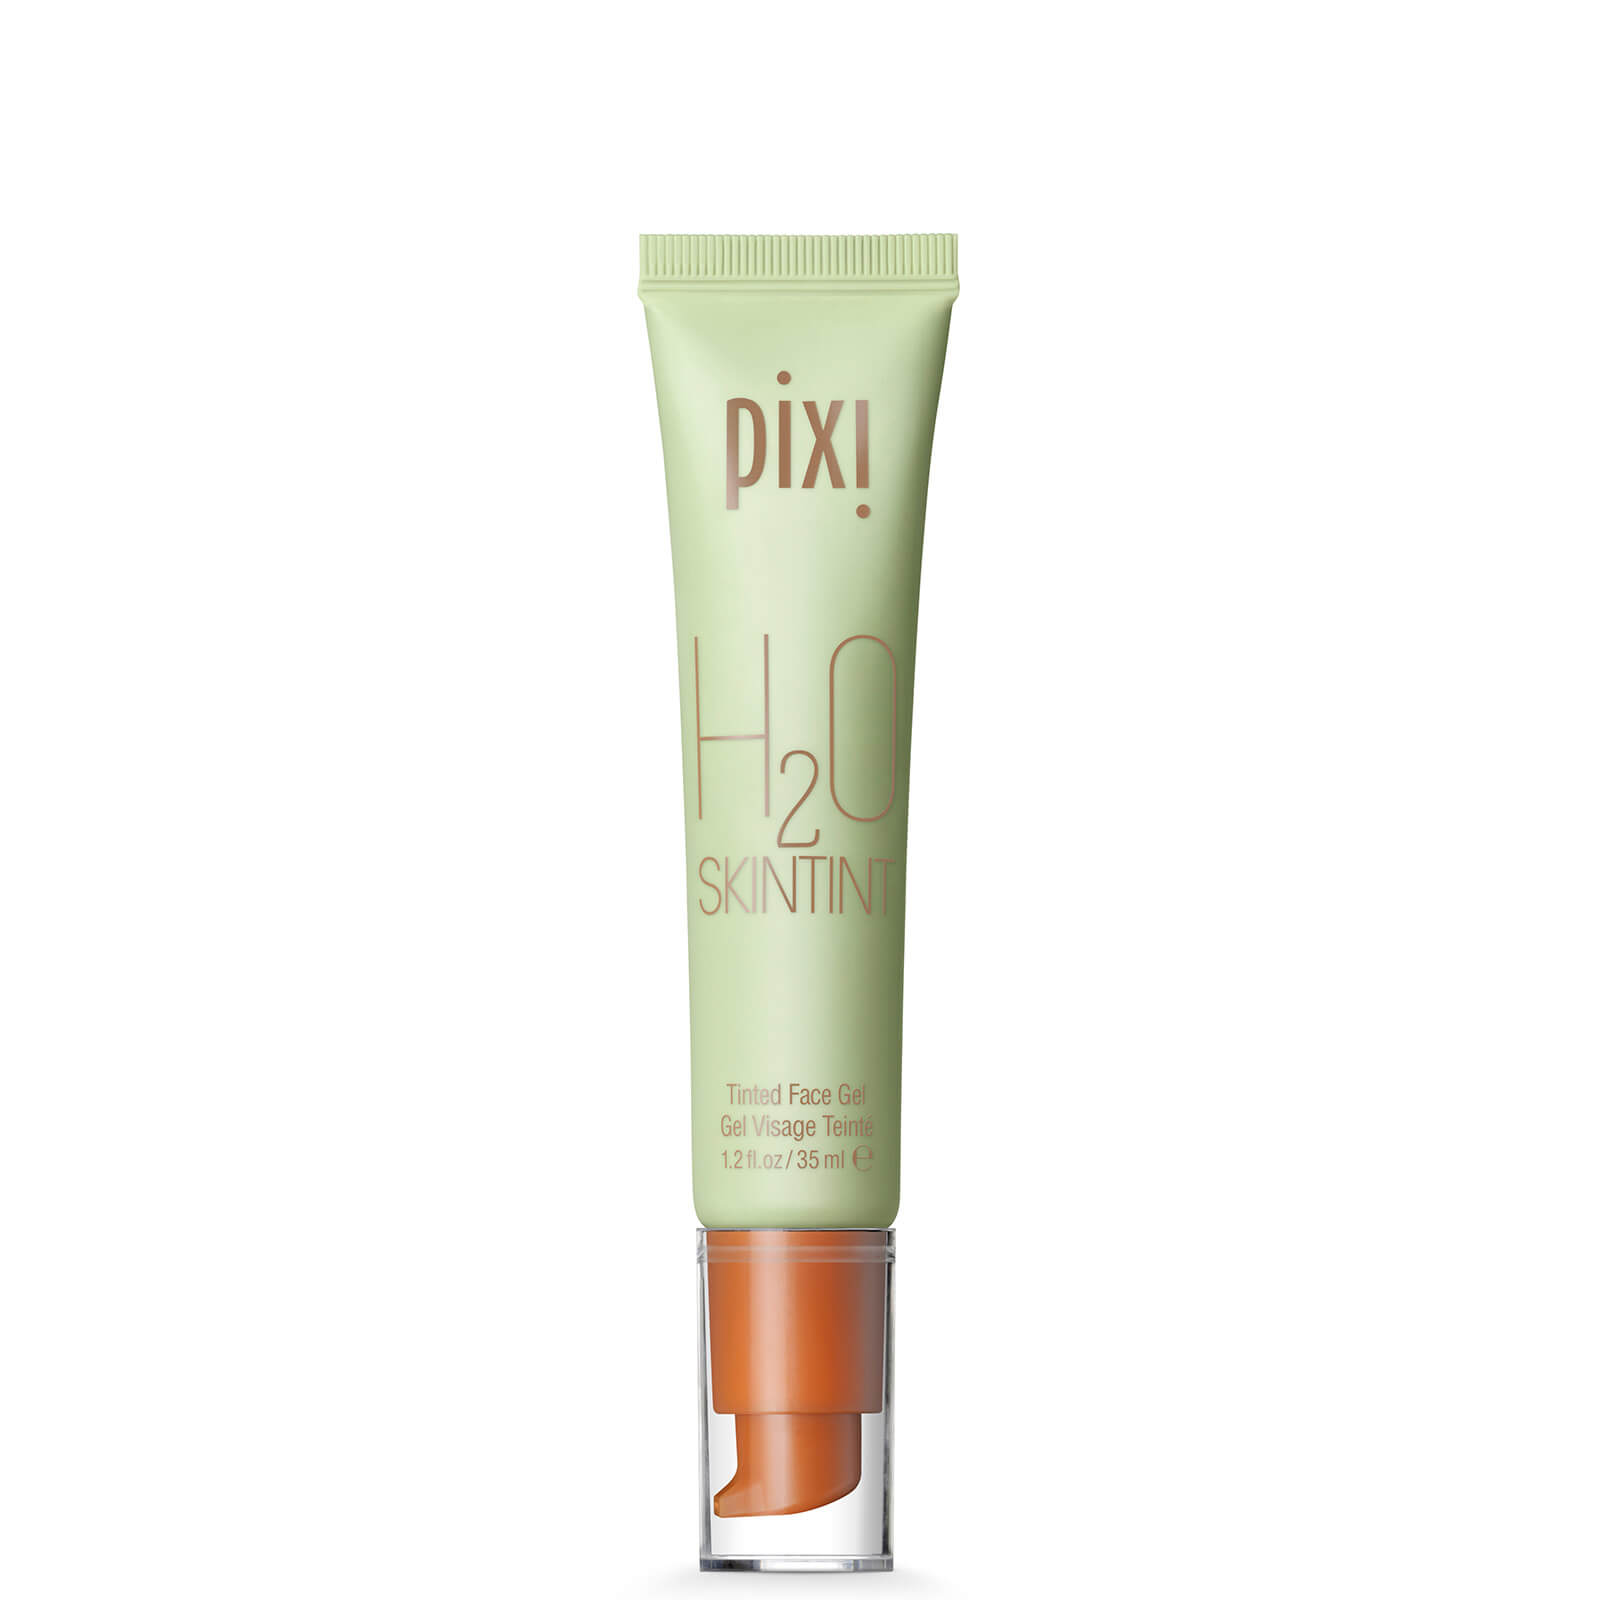 PIXI H20 Skintint 35ml (Various Shades) - Cinnamon